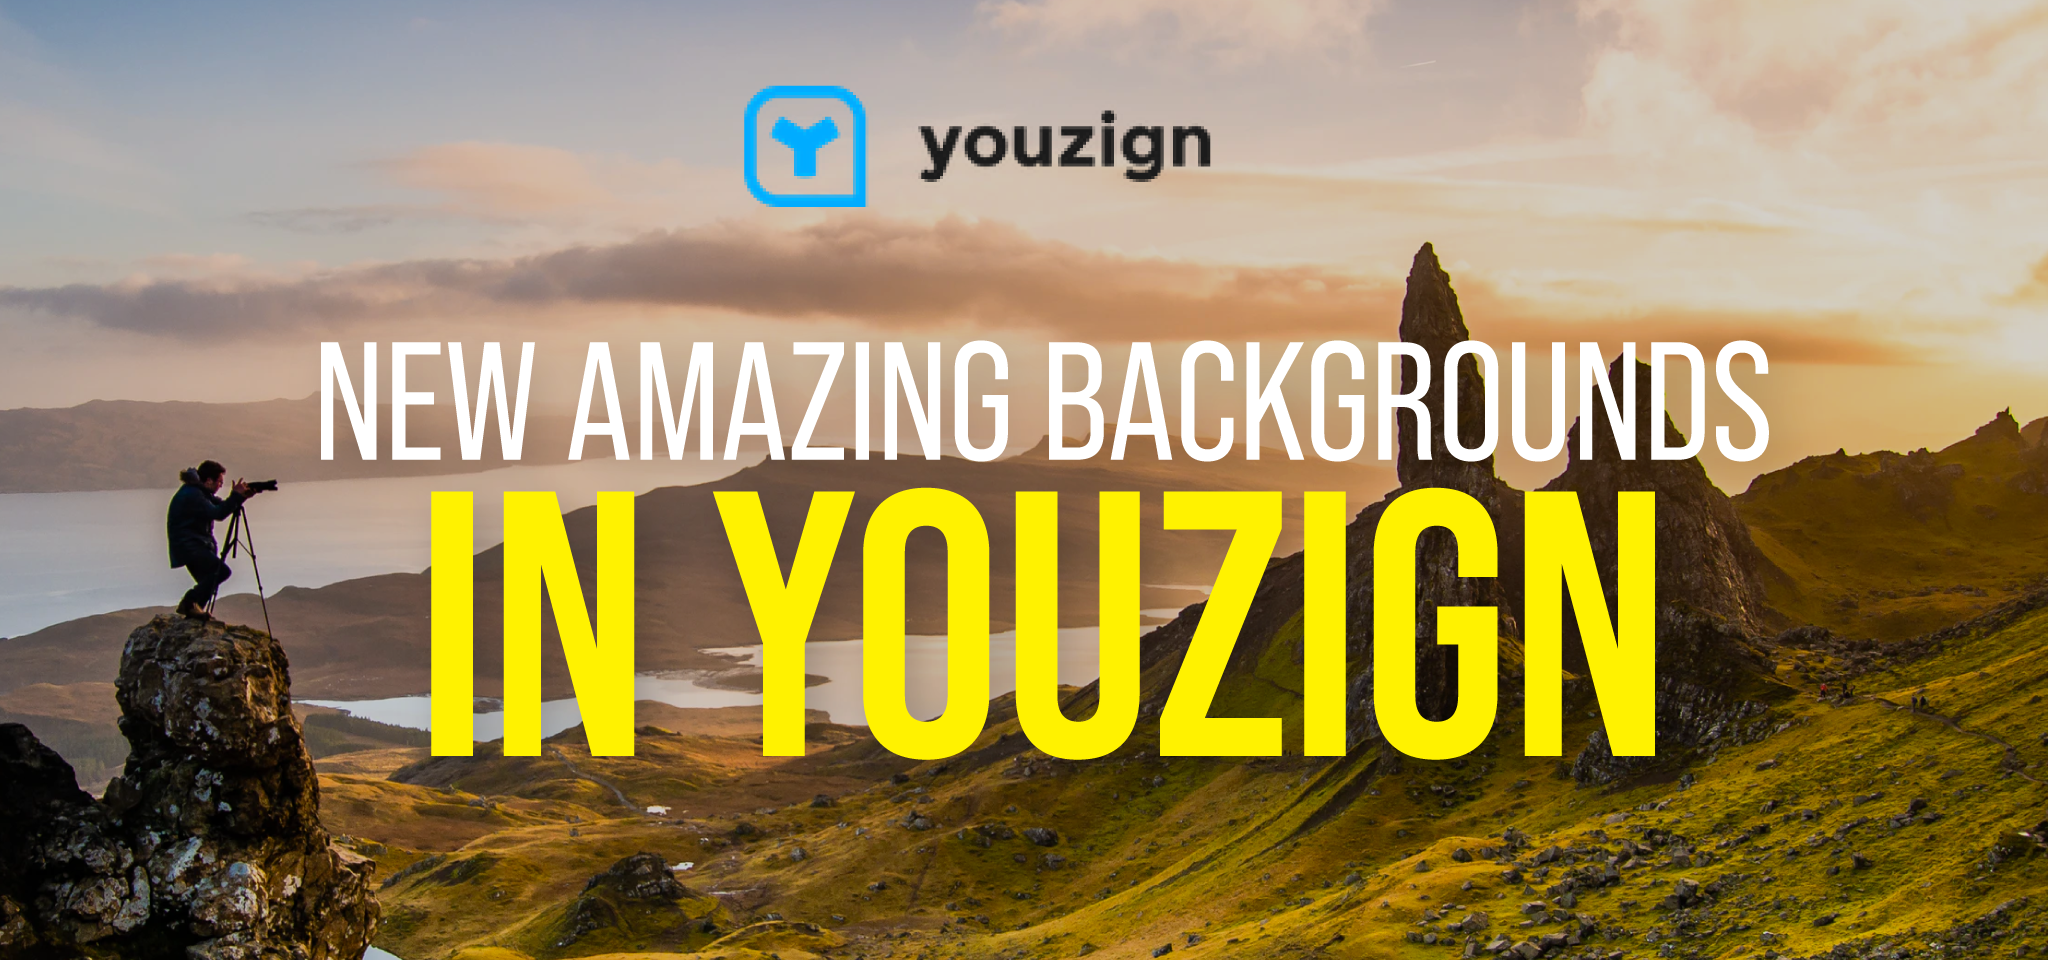 New amazing backgrounds in Youzign